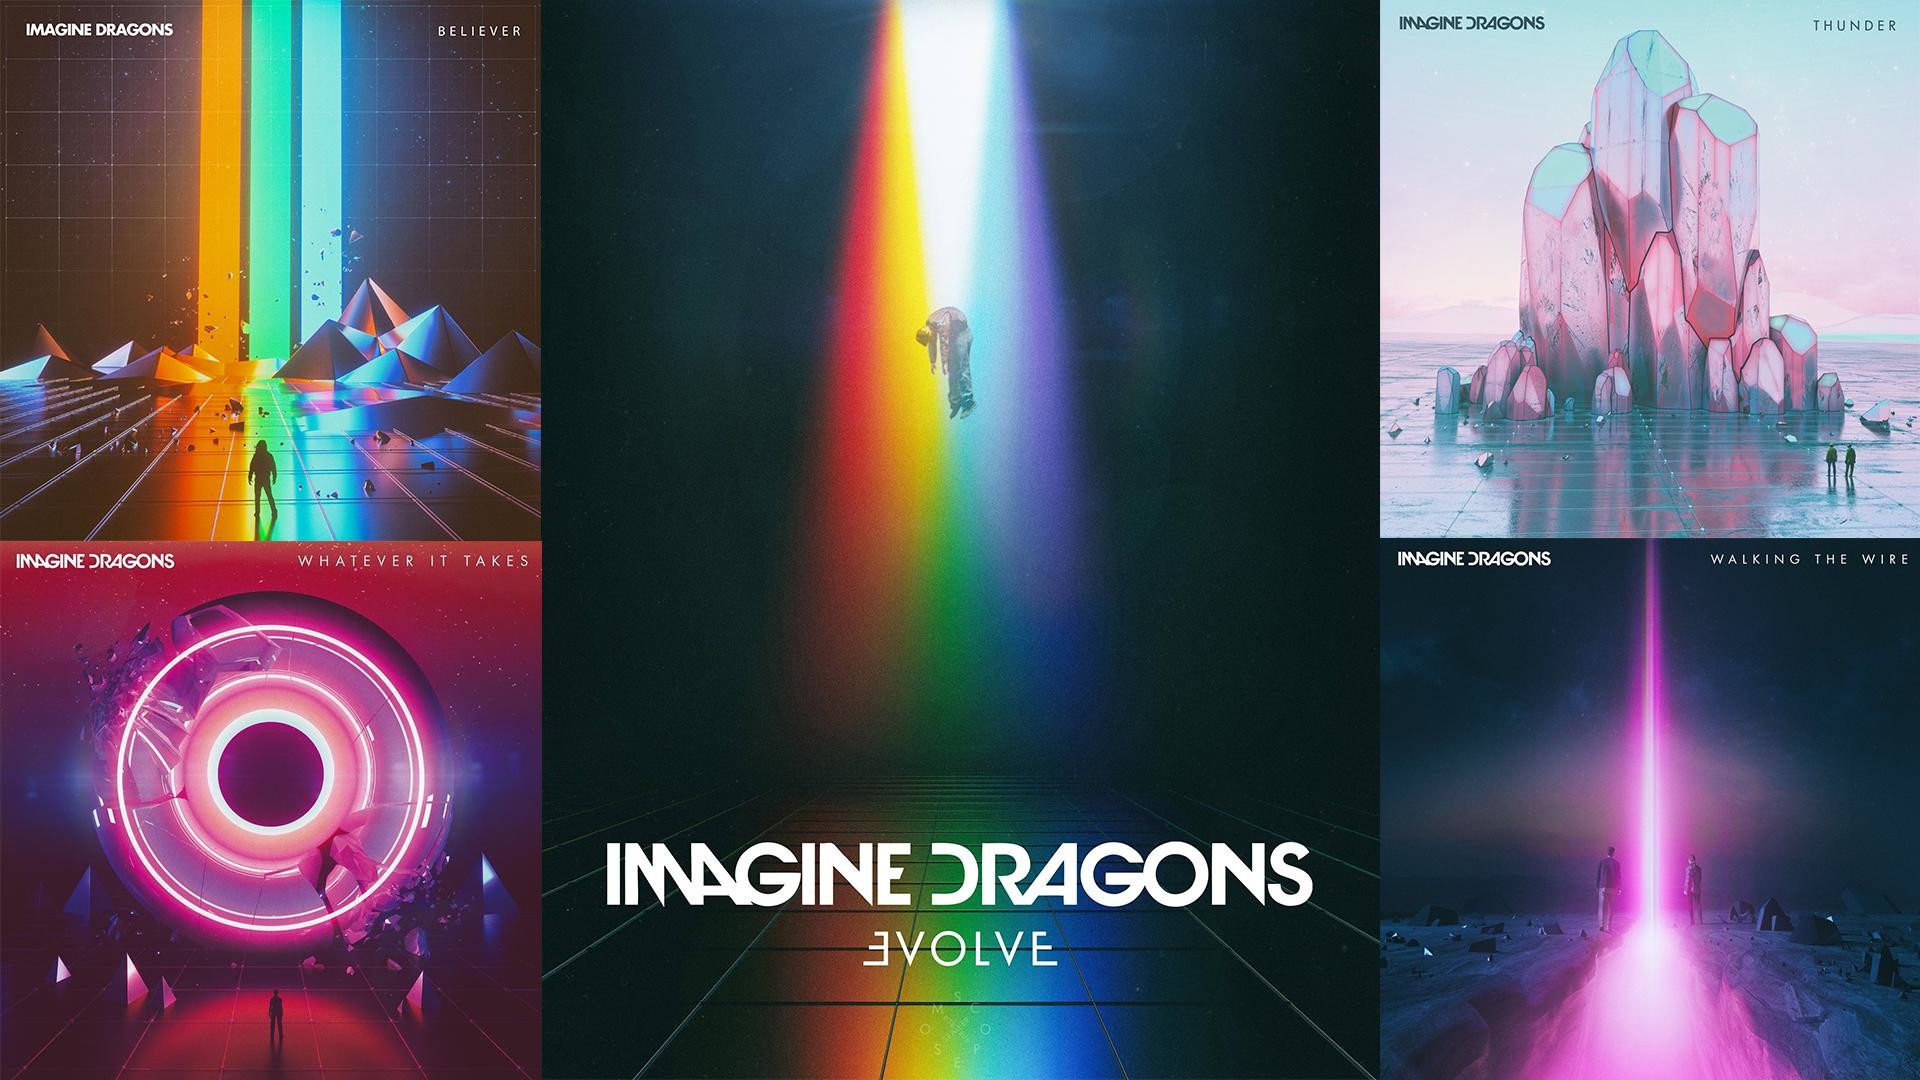 Imagine трек. Imagine Dragons обложки Mercury. Imagine Dragons обложки альбомов. Imagine Dragons фон.